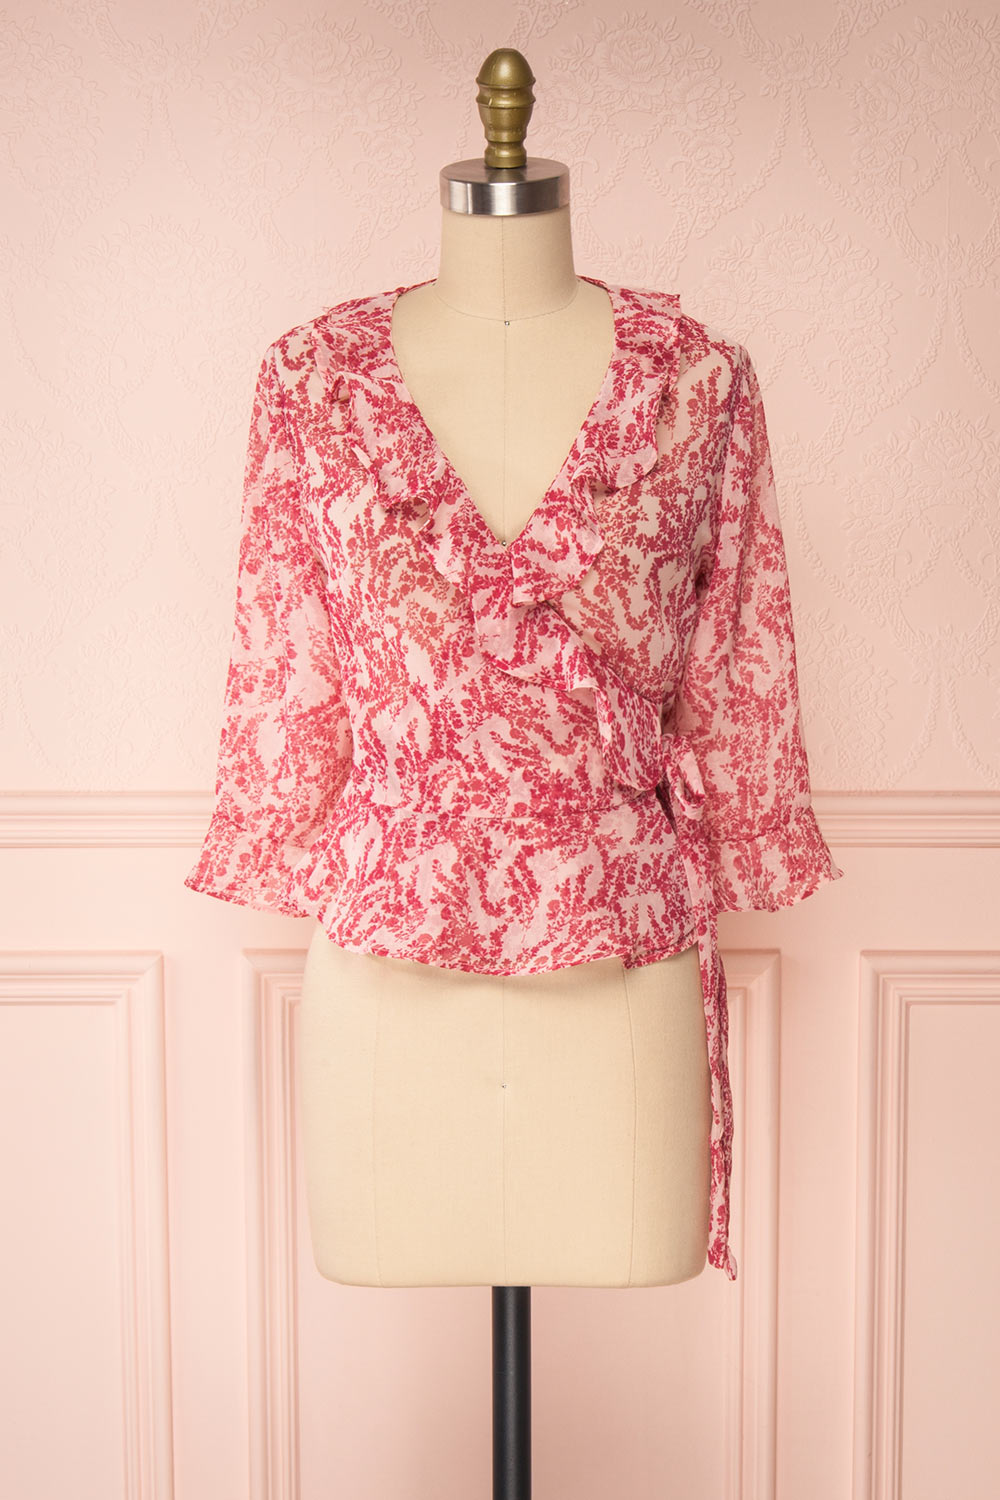 Steren Pink Floral Translucent Blouse w/ Frills | Boutique 1861 front view 